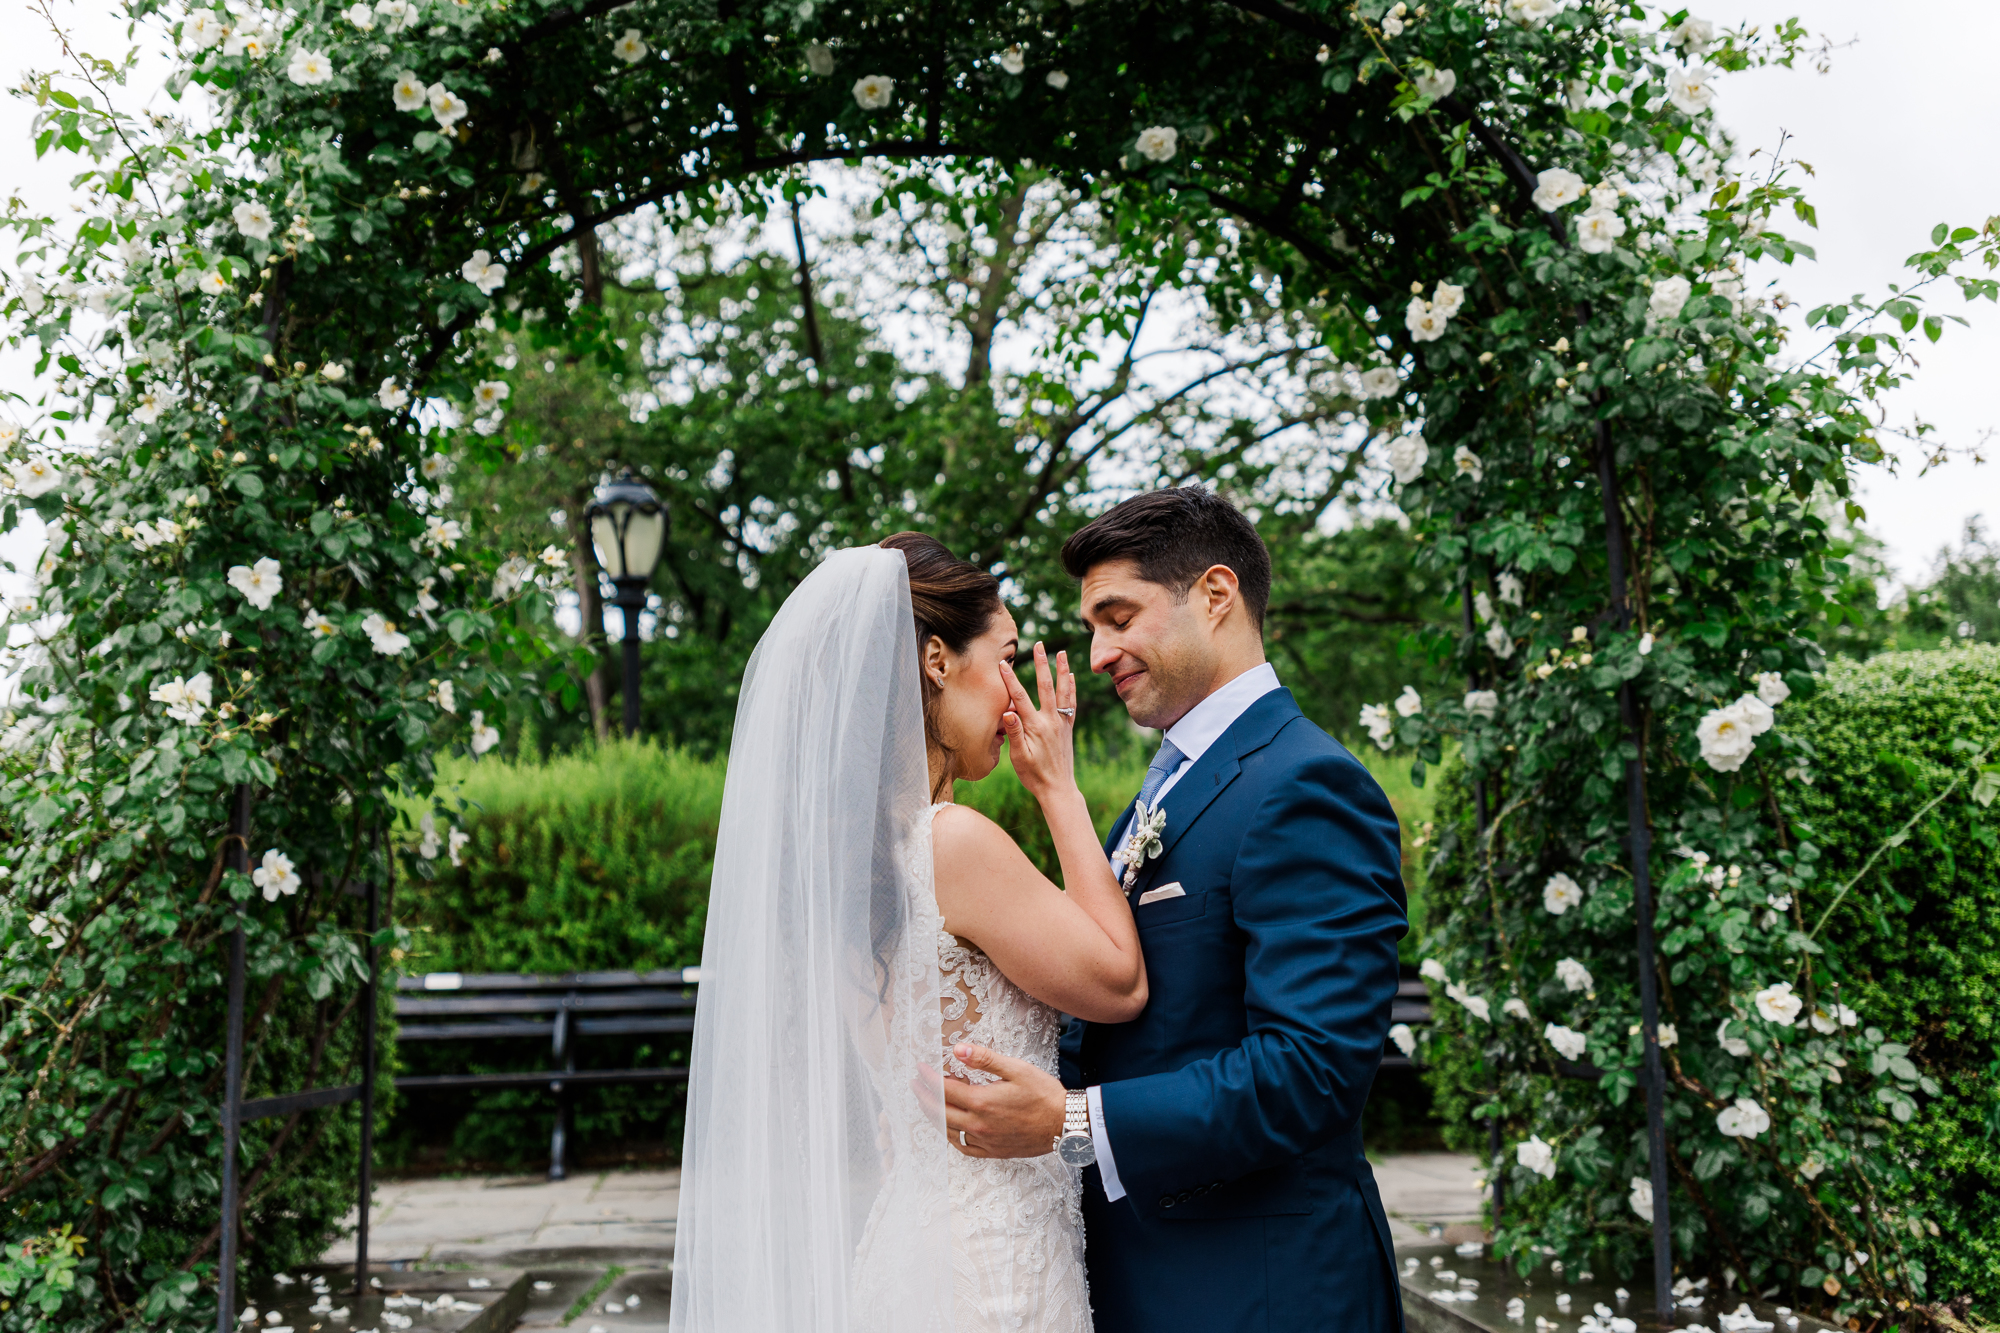 Glowing New York Wedding Photos in Conservatory Garden